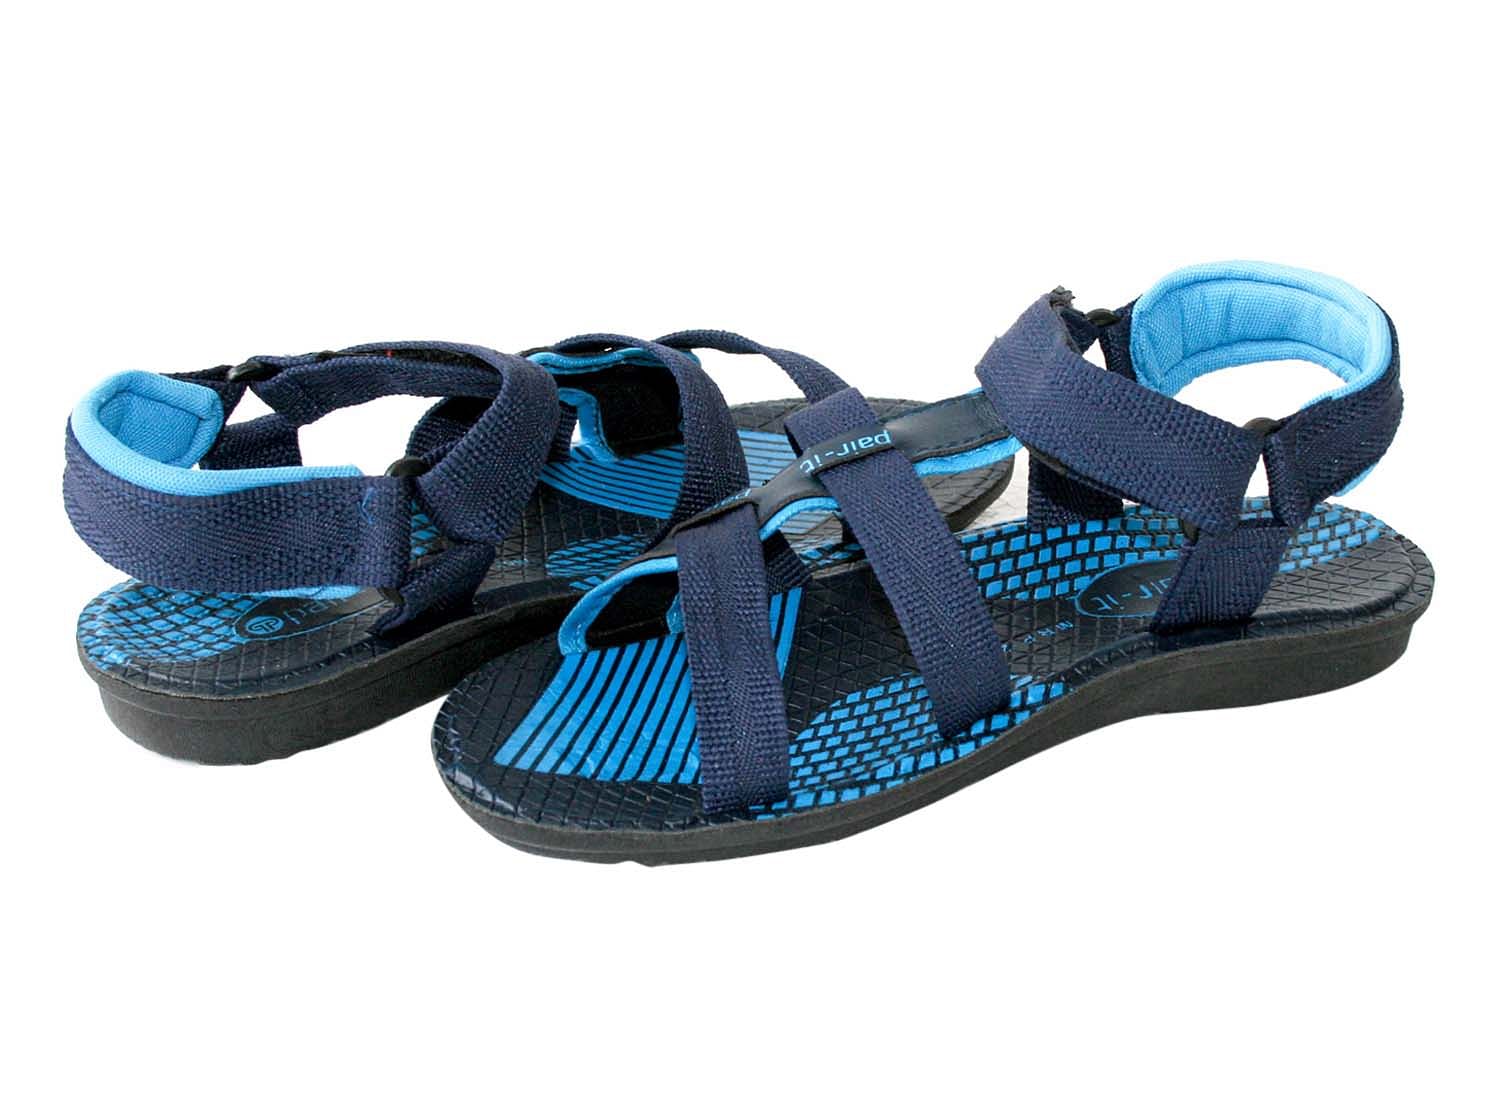 Pair-it Mn Sandals-RE-Gladio113-N.Blue/S.BLUE